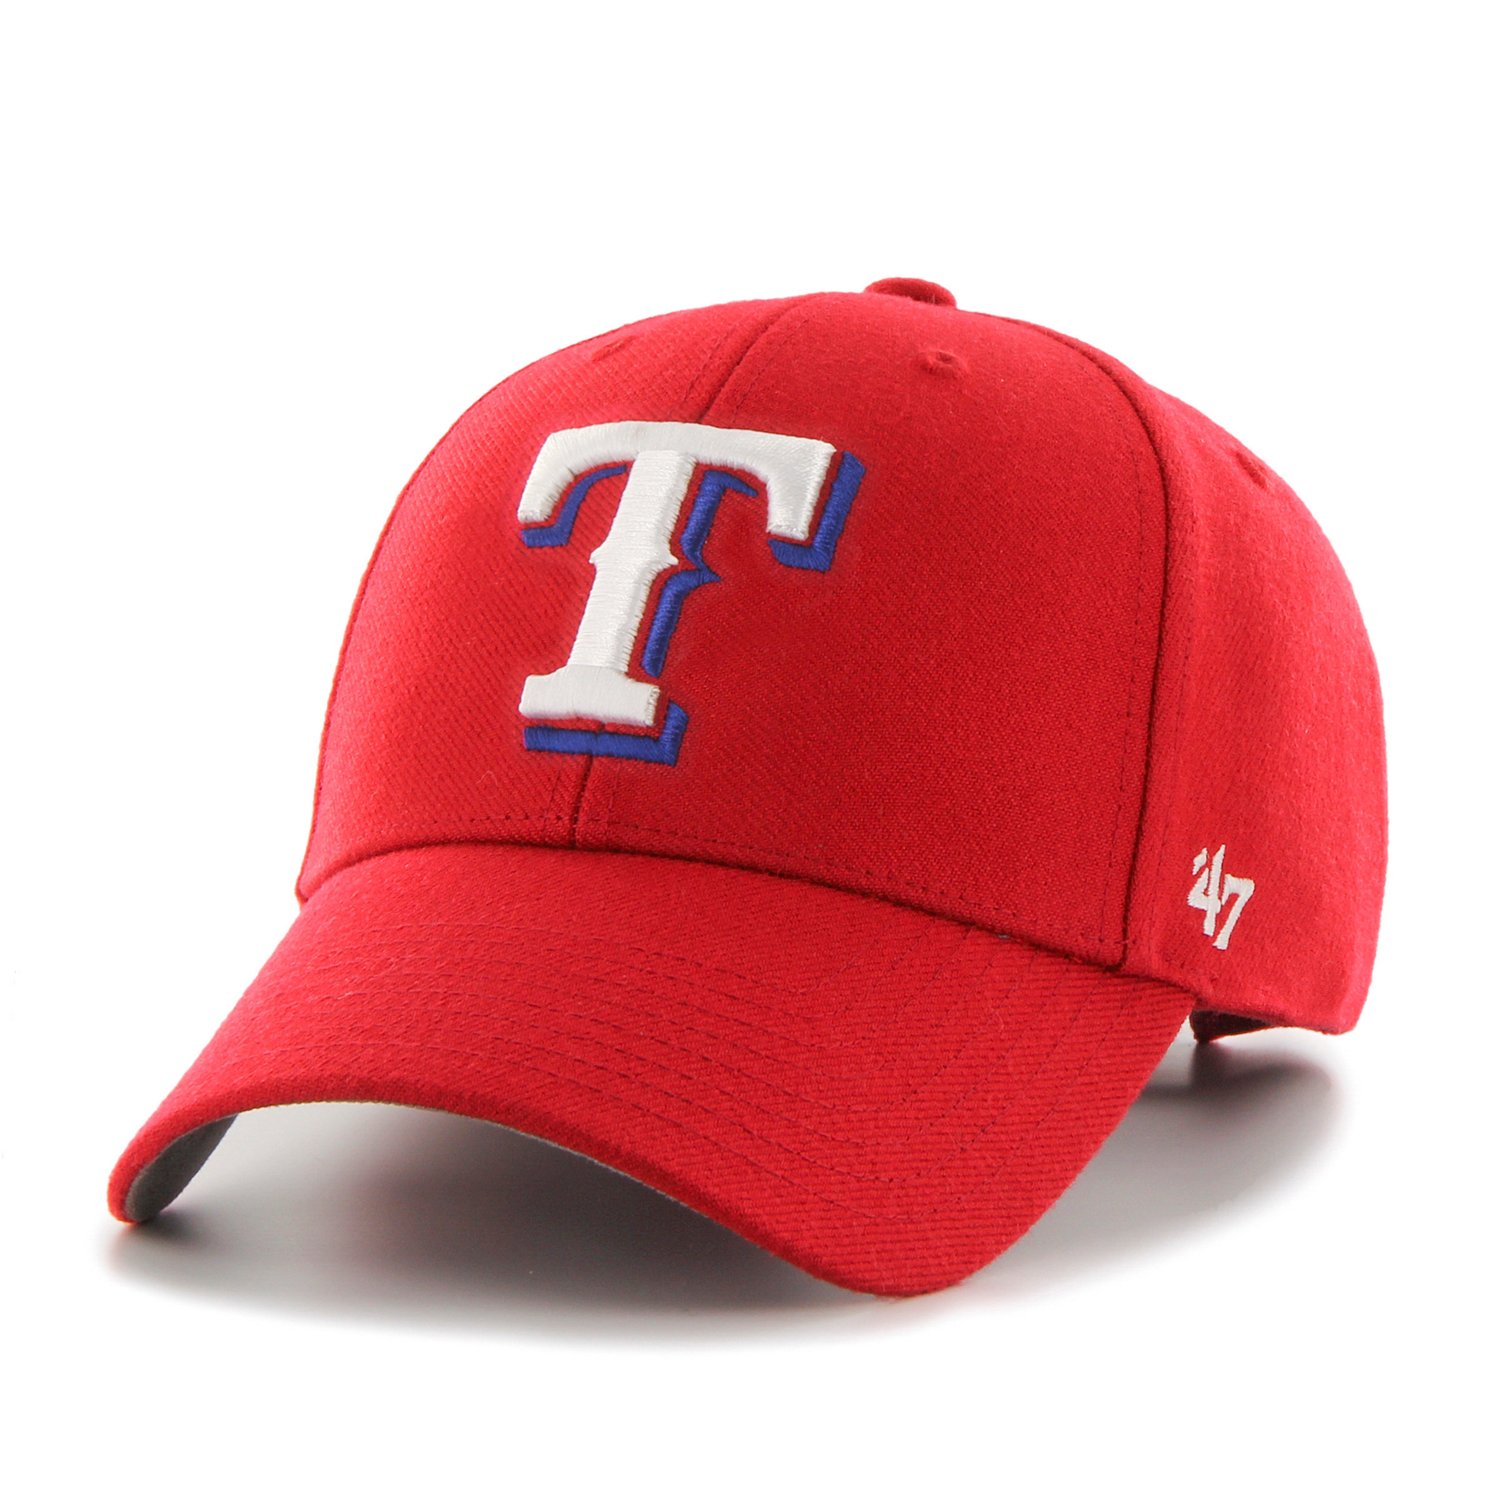 Texas Rangers Hats | Texas Rangers Caps 